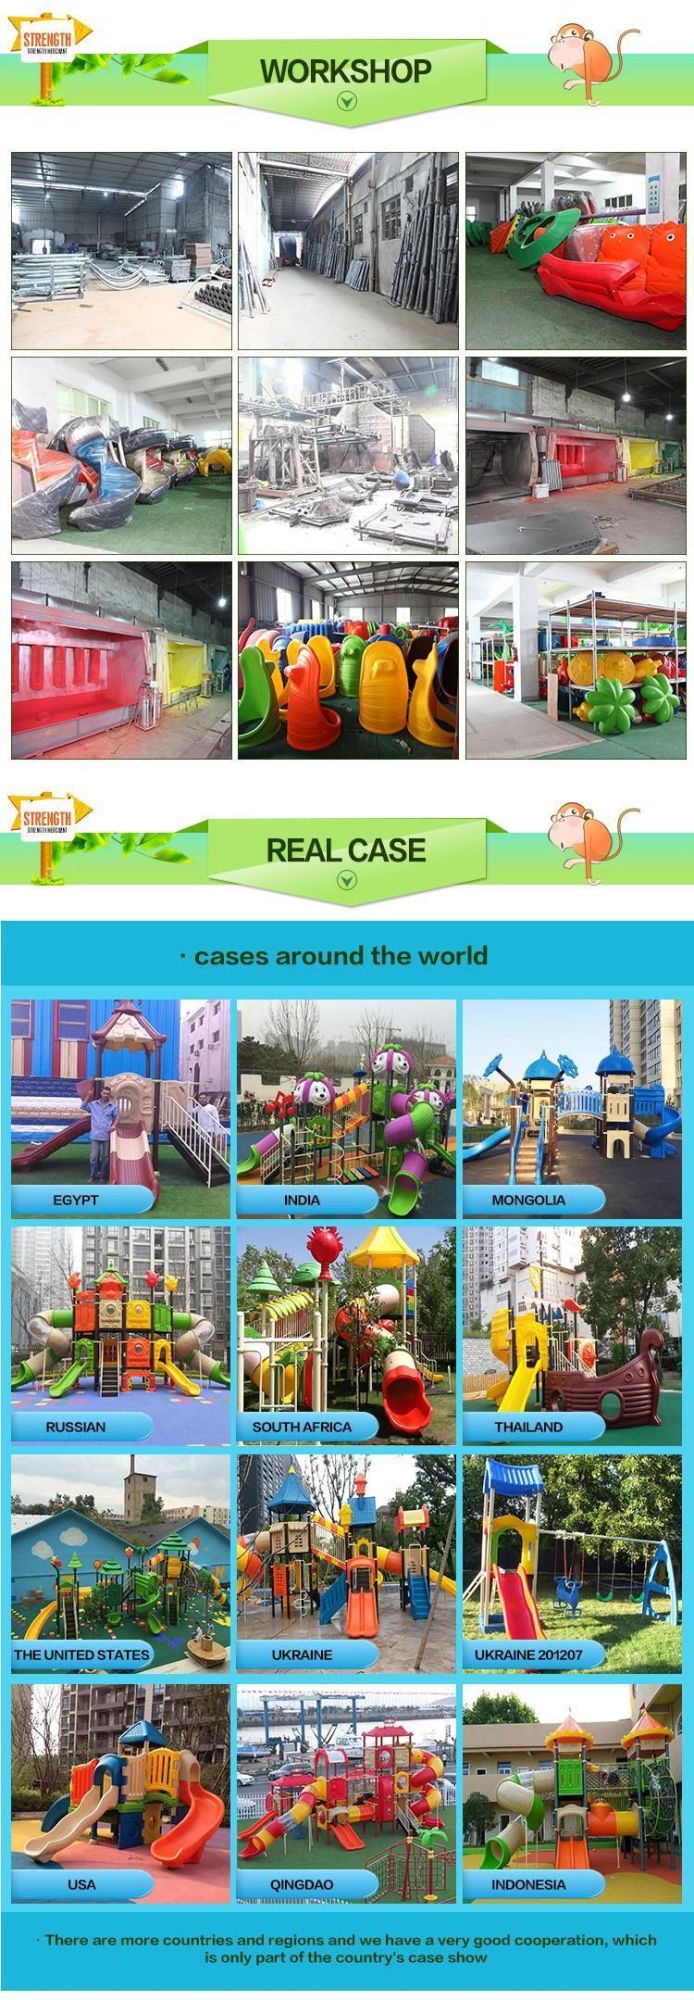 Large Playground, Park Playground Outdoor Playground Equipment for Children